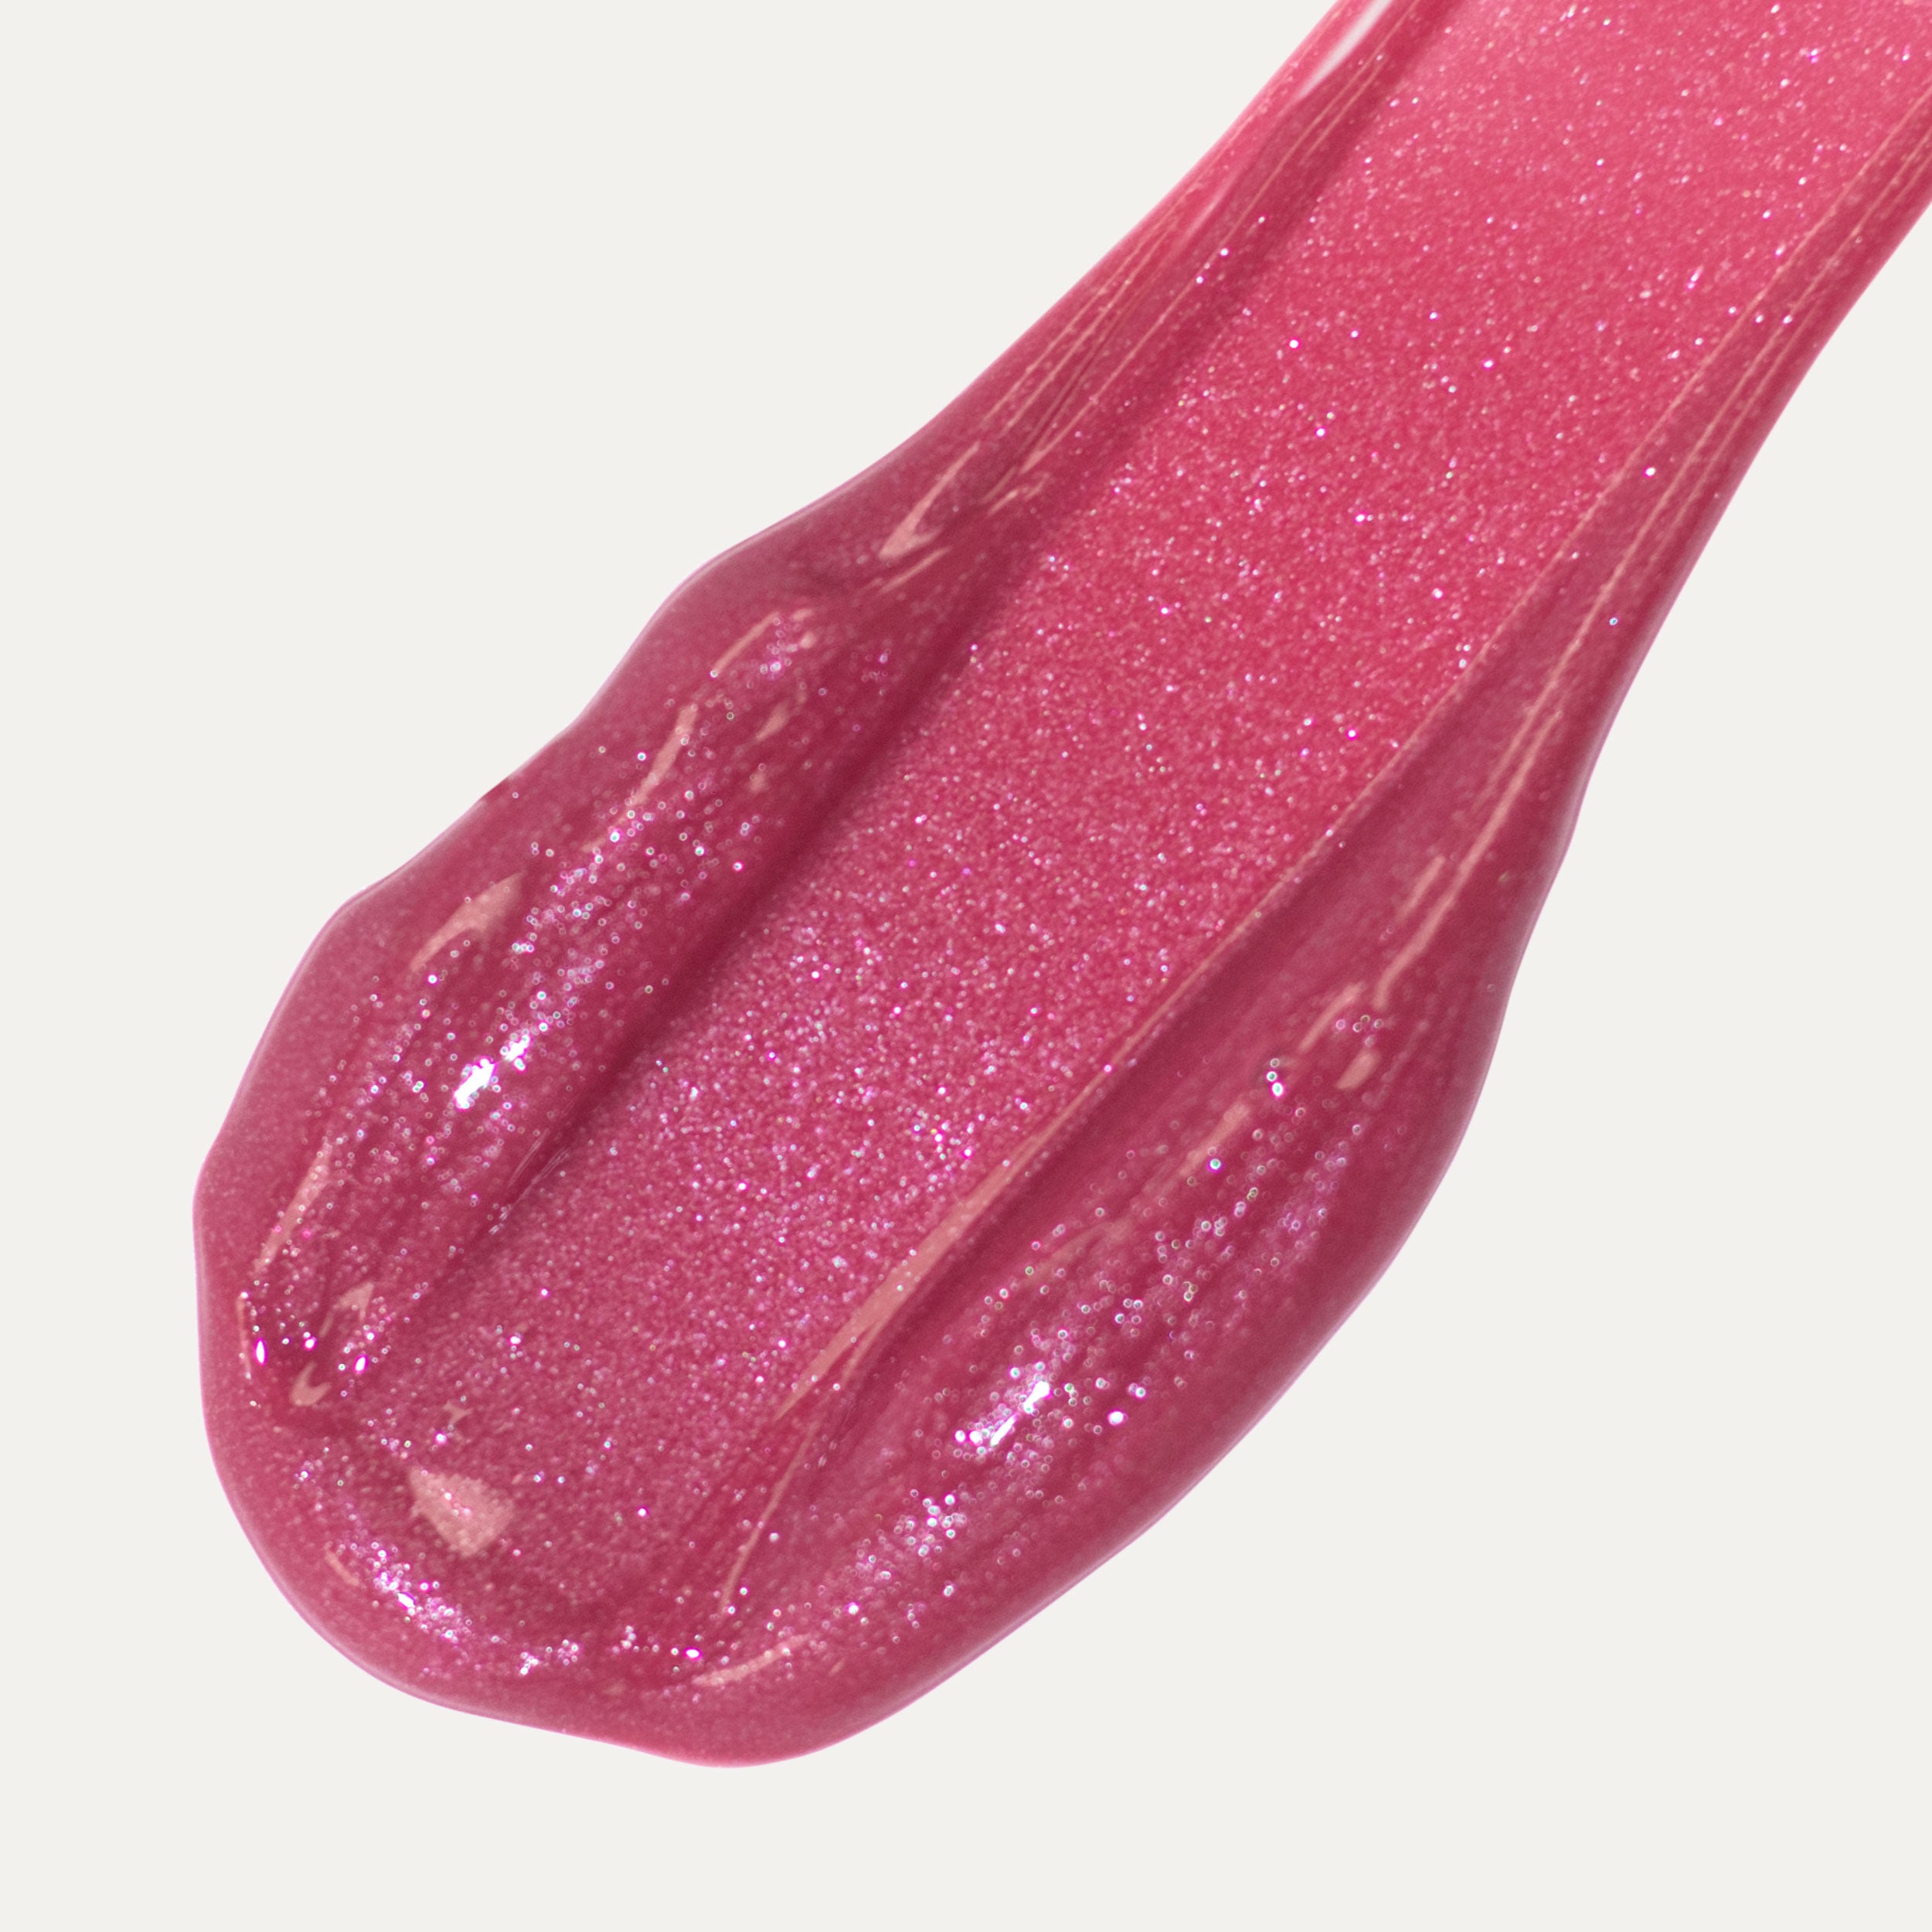 Lip Colour Serum (Multiple Shades)